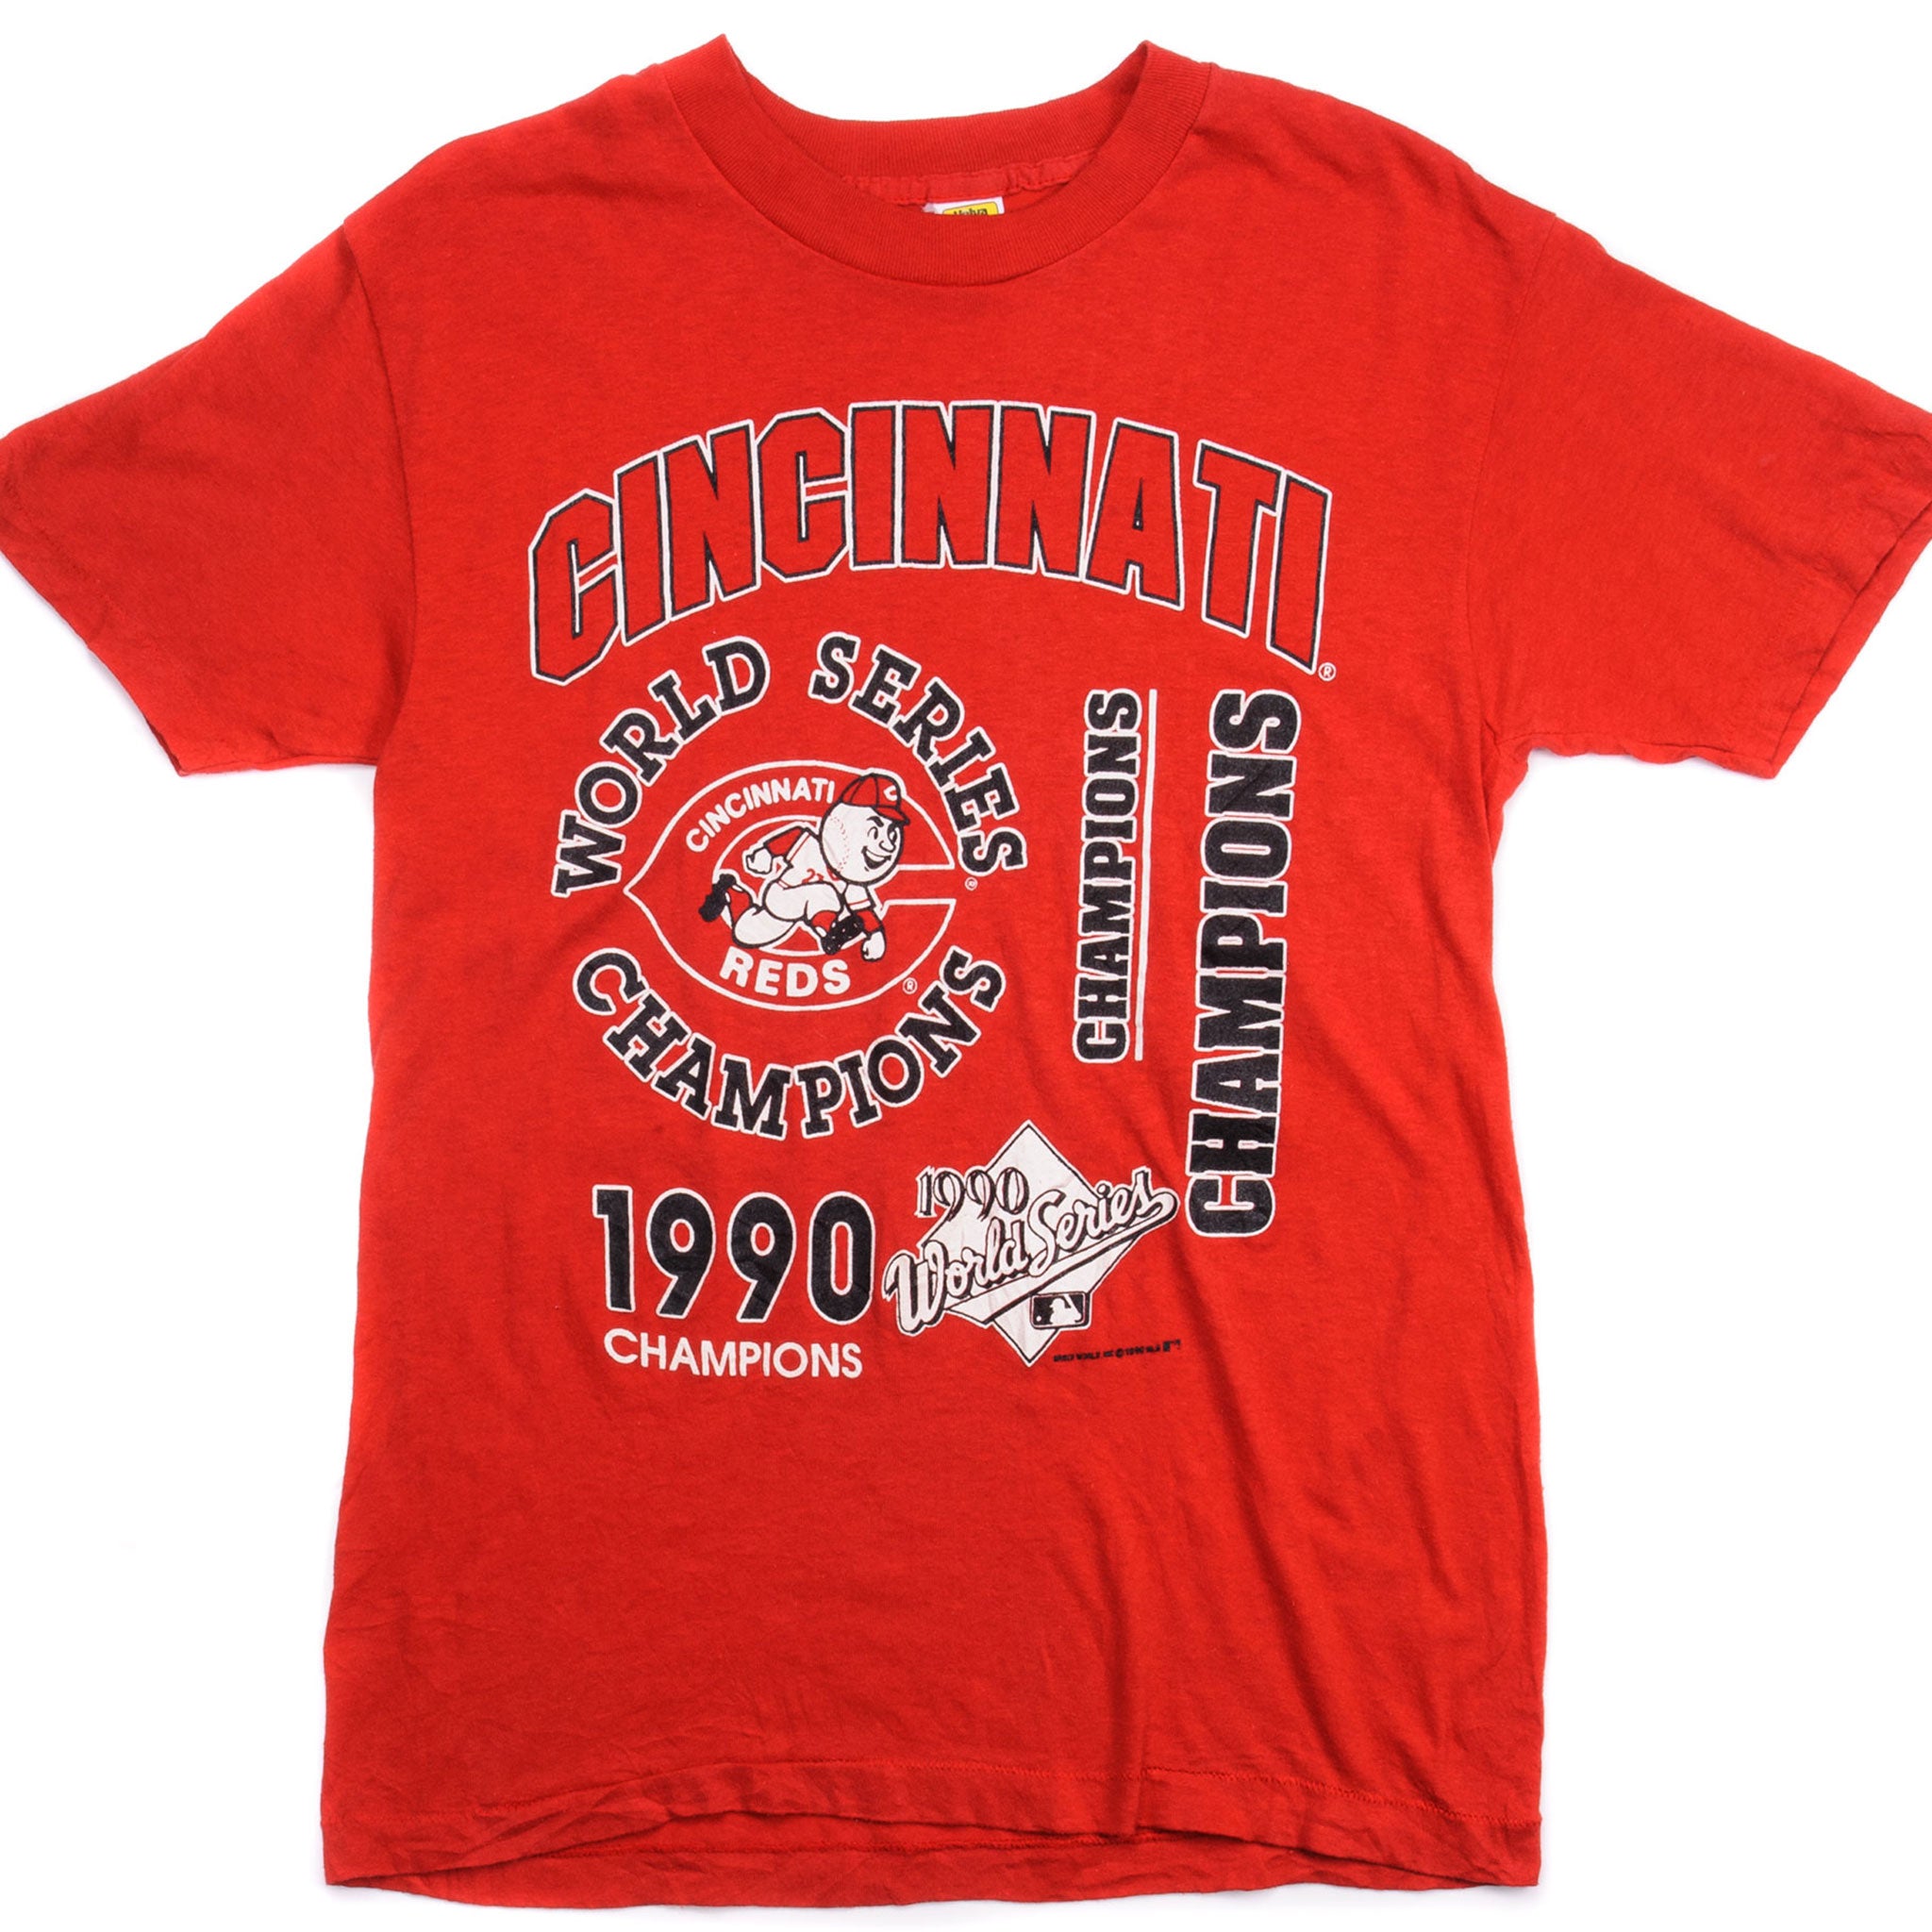 NWT Vintage 1990 Cincinnati Reds World Series Champions Red